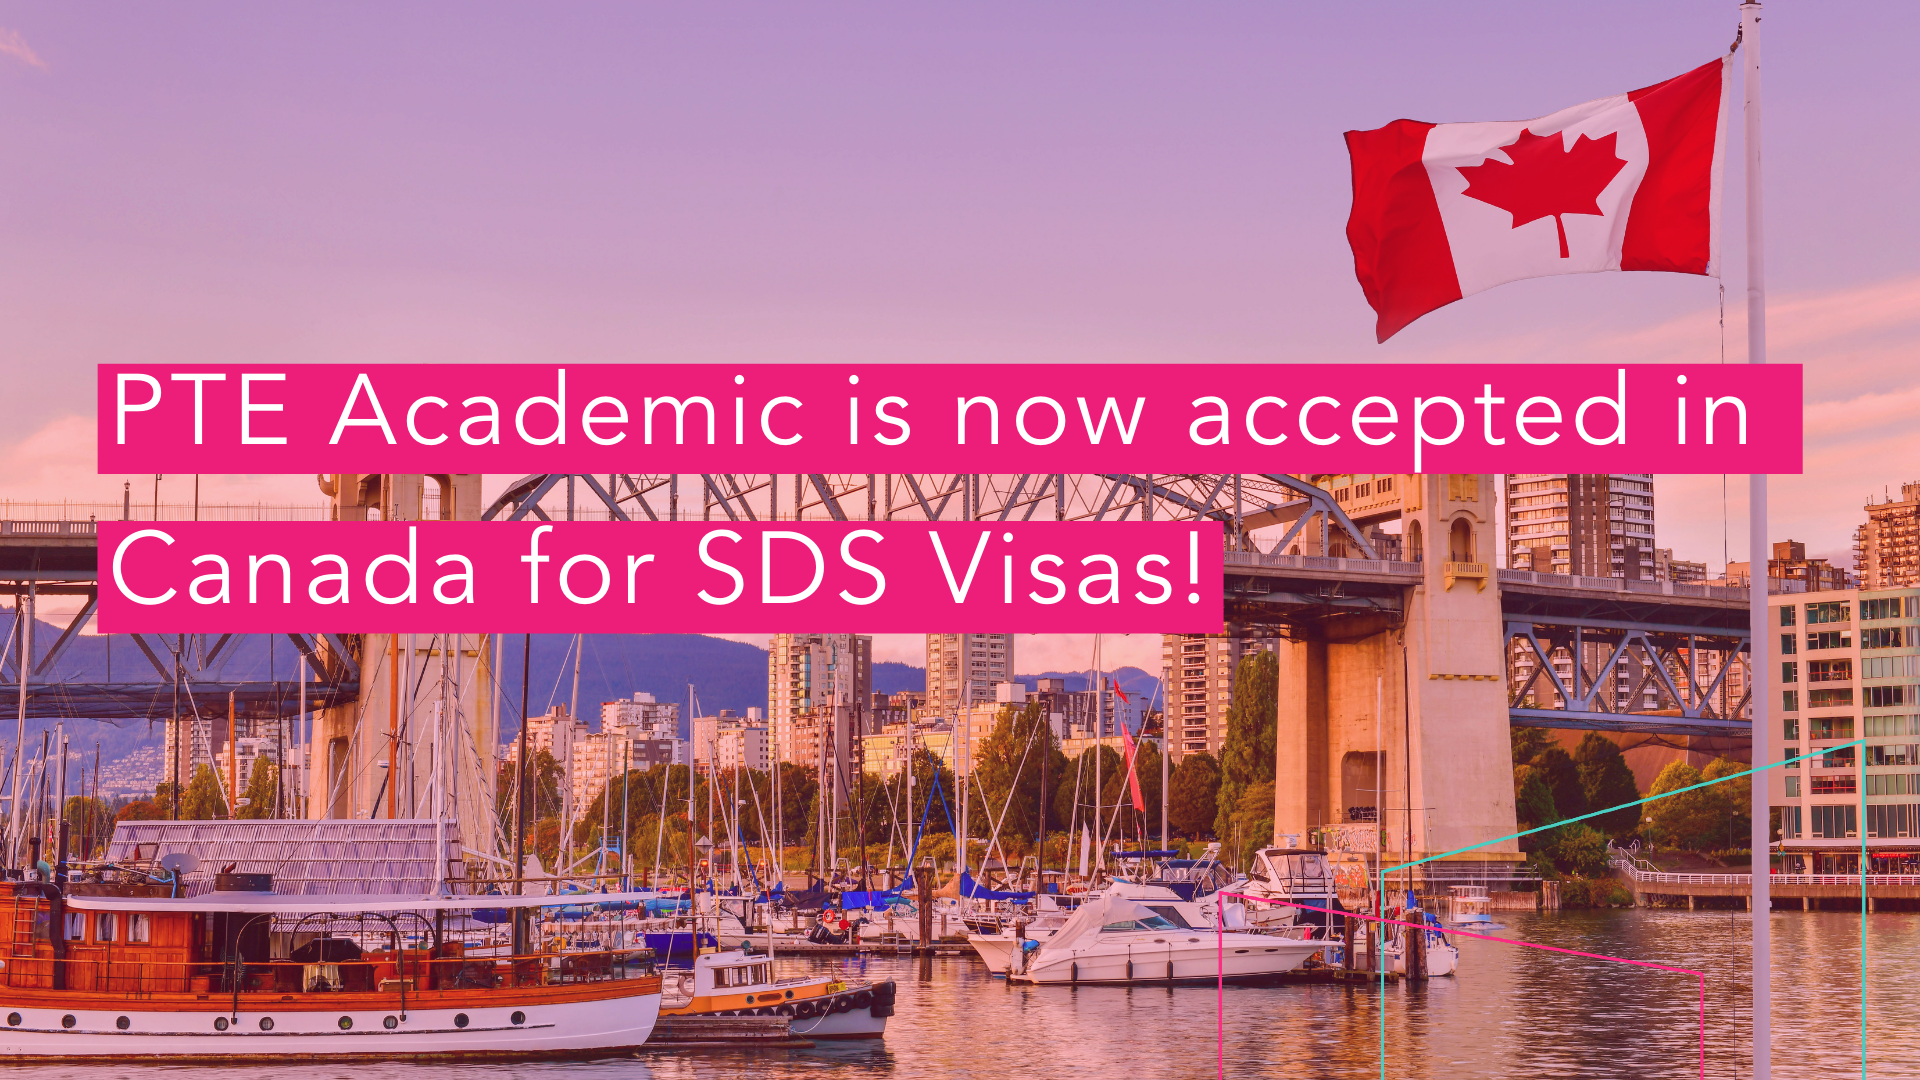 Canada for Student Direct Stream Visas!